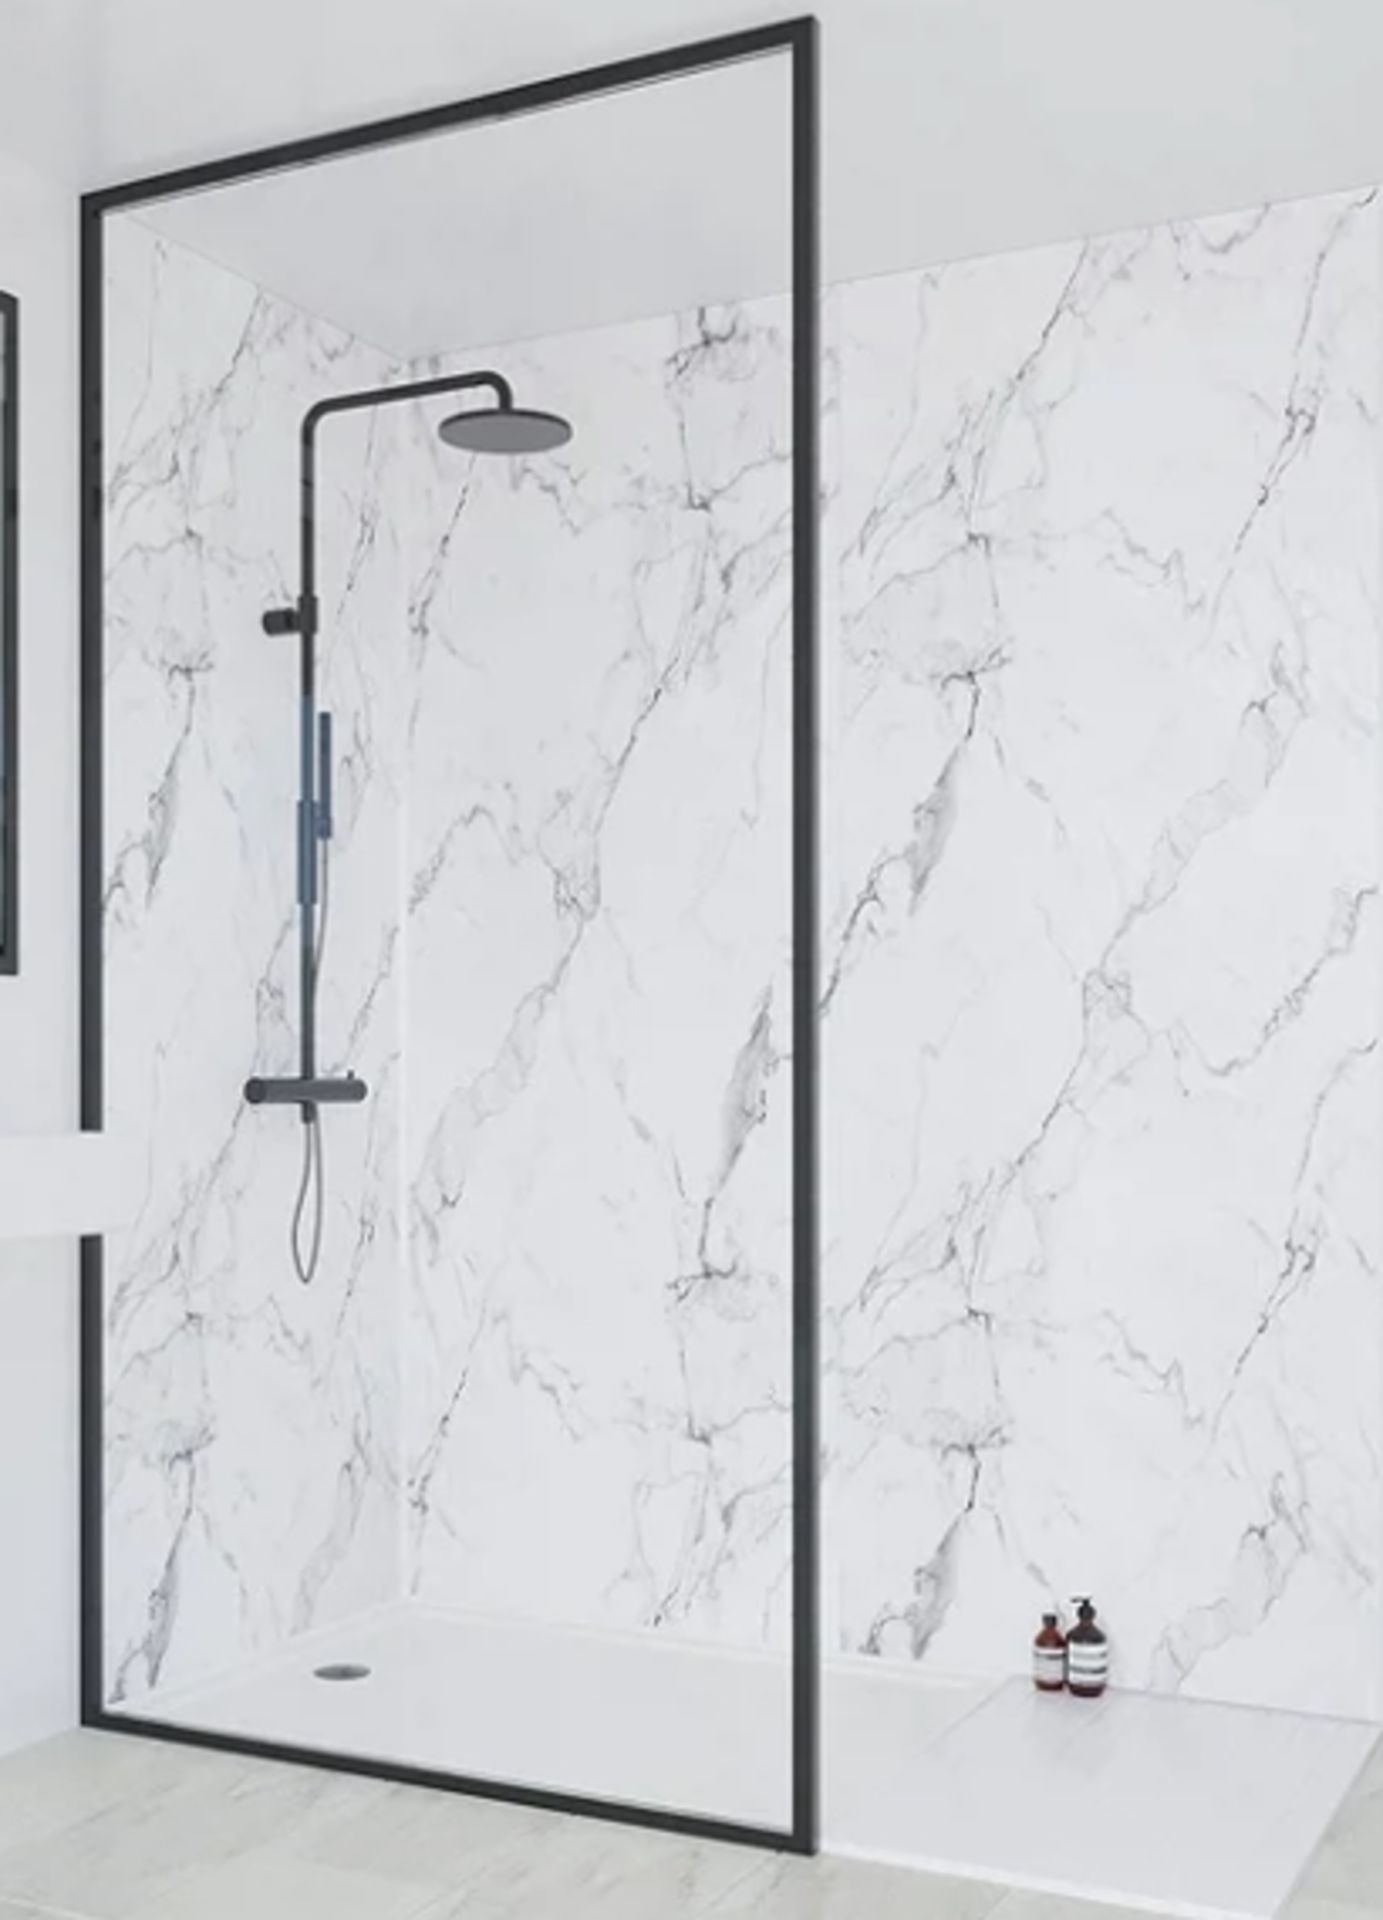 3 x Monolisa Marble Effect Shower Room Glazed Porcelain Wall Tiles - Size: 1600 x 900 x 10.5 cms - - Image 6 of 6